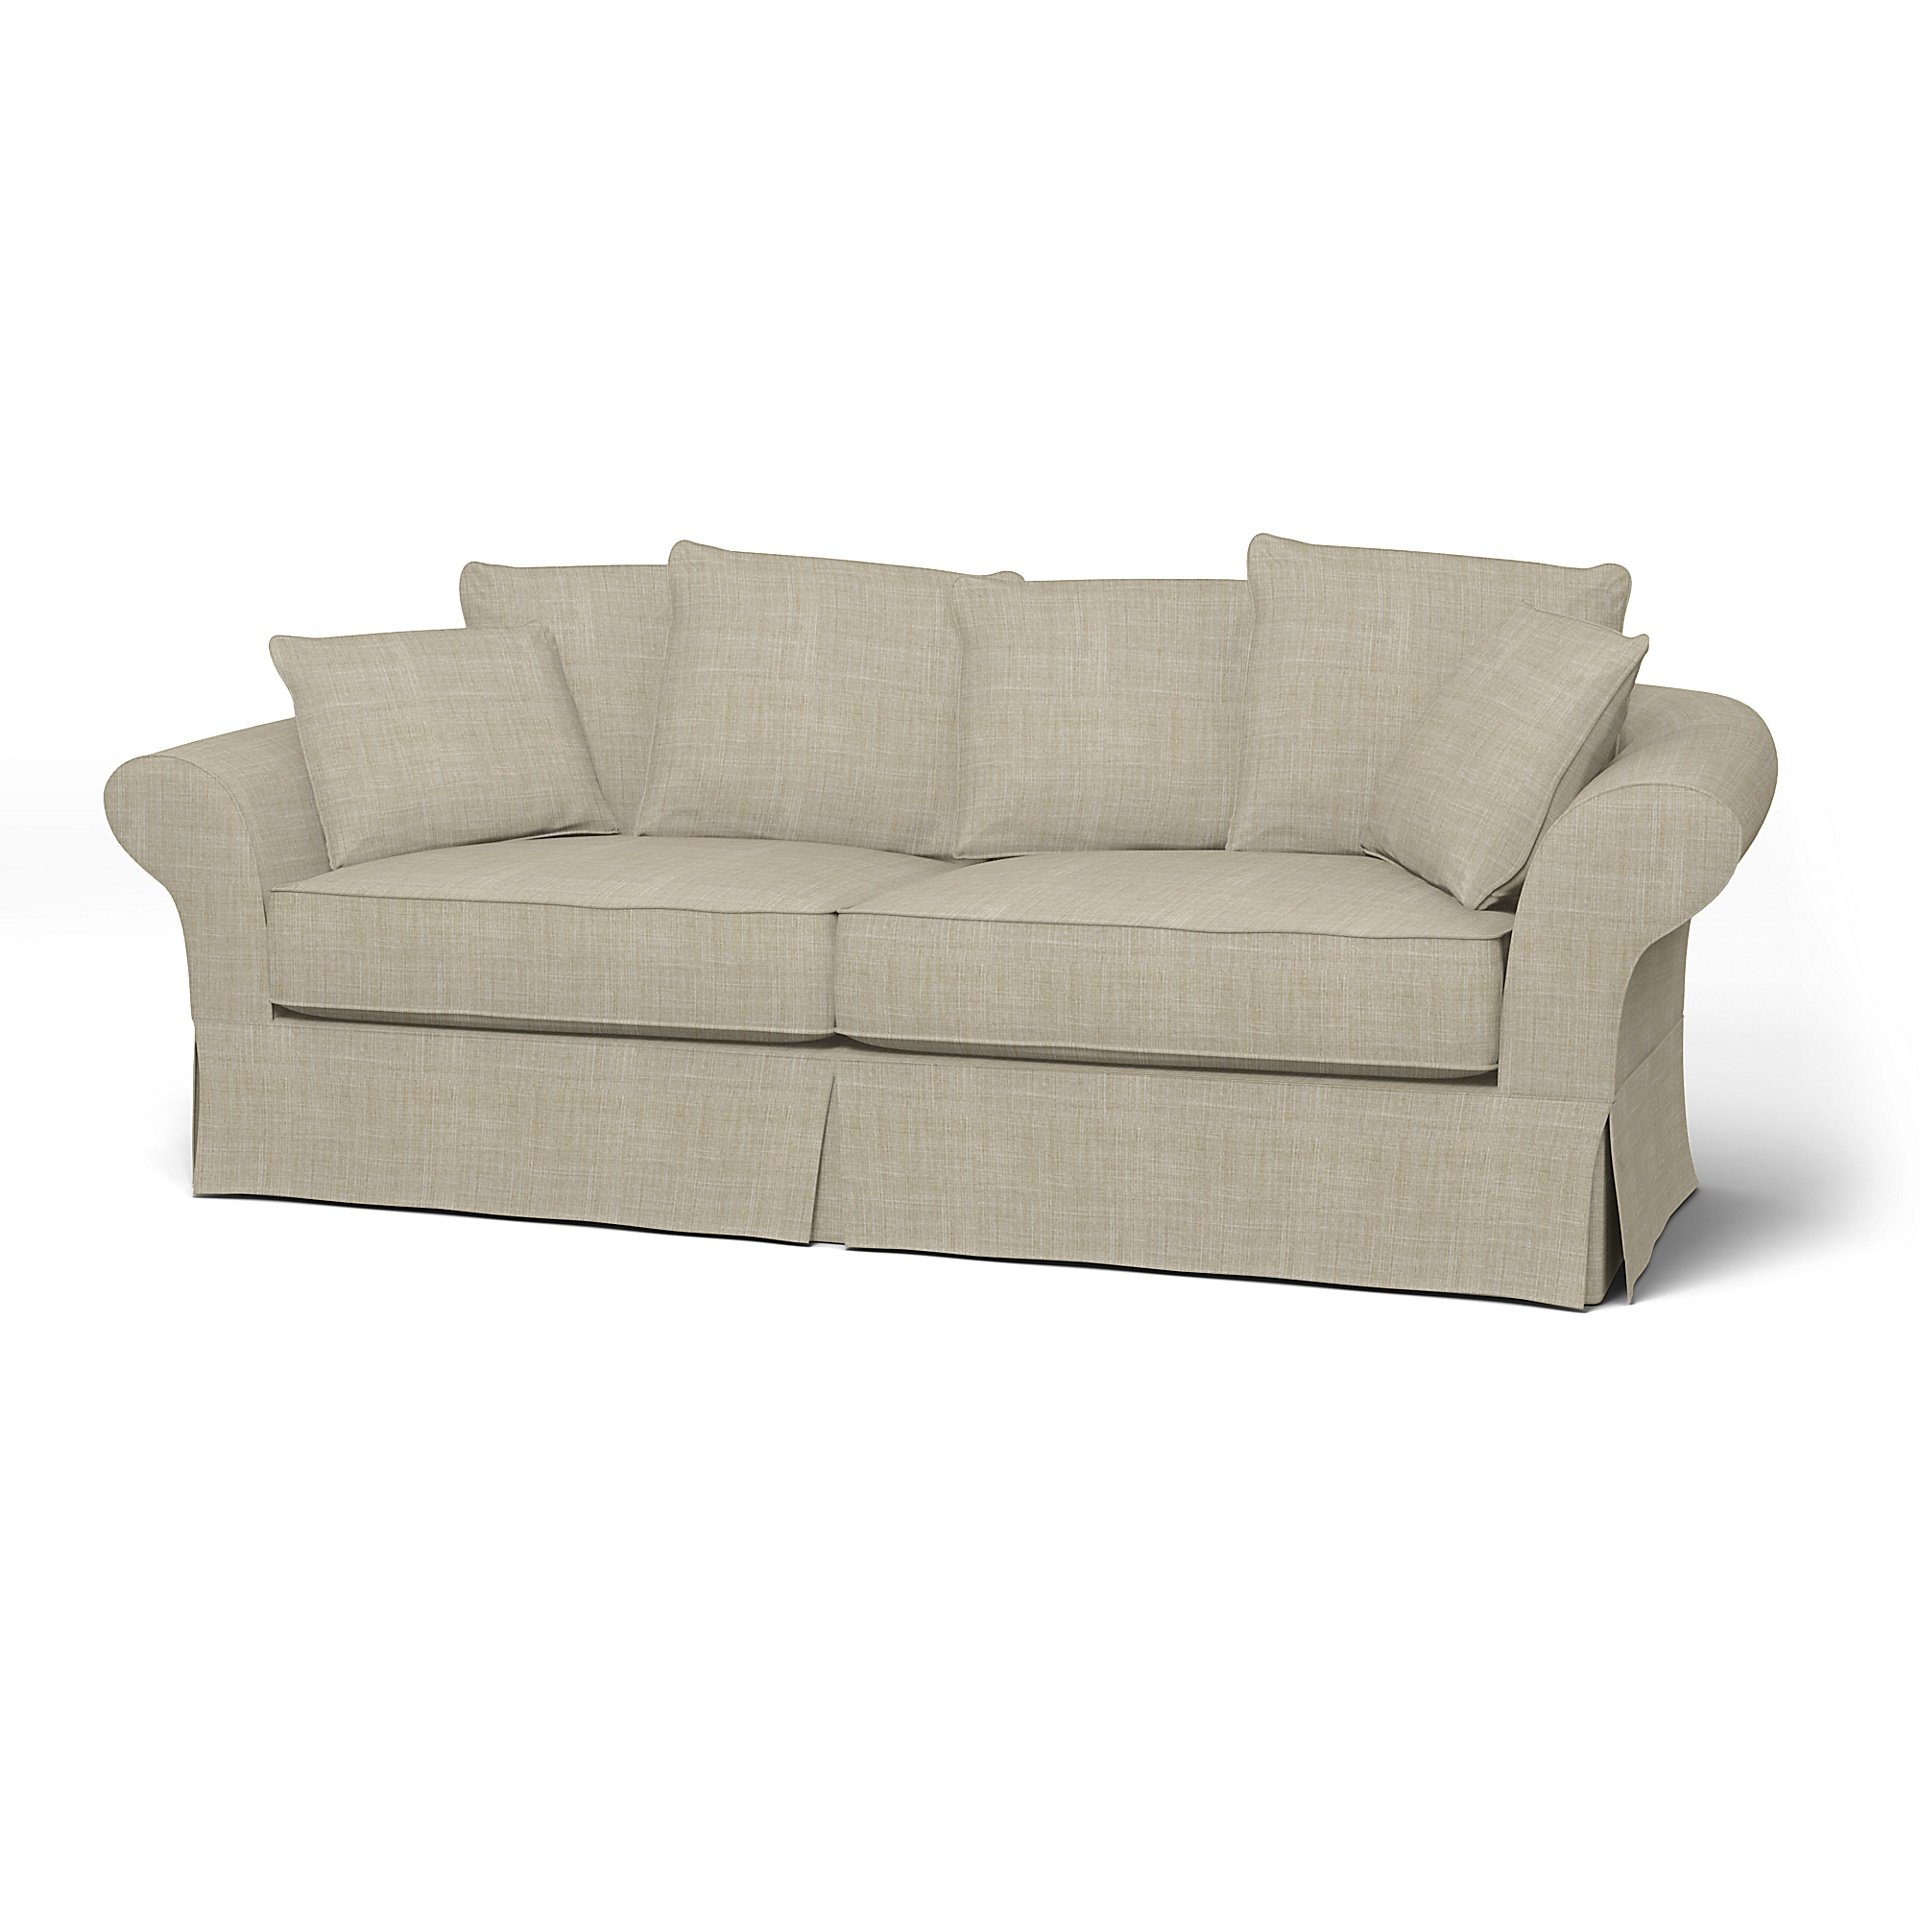 IKEA - Backamo 3 Seater Sofa Cover, Sand Beige, Boucle & Texture - Bemz